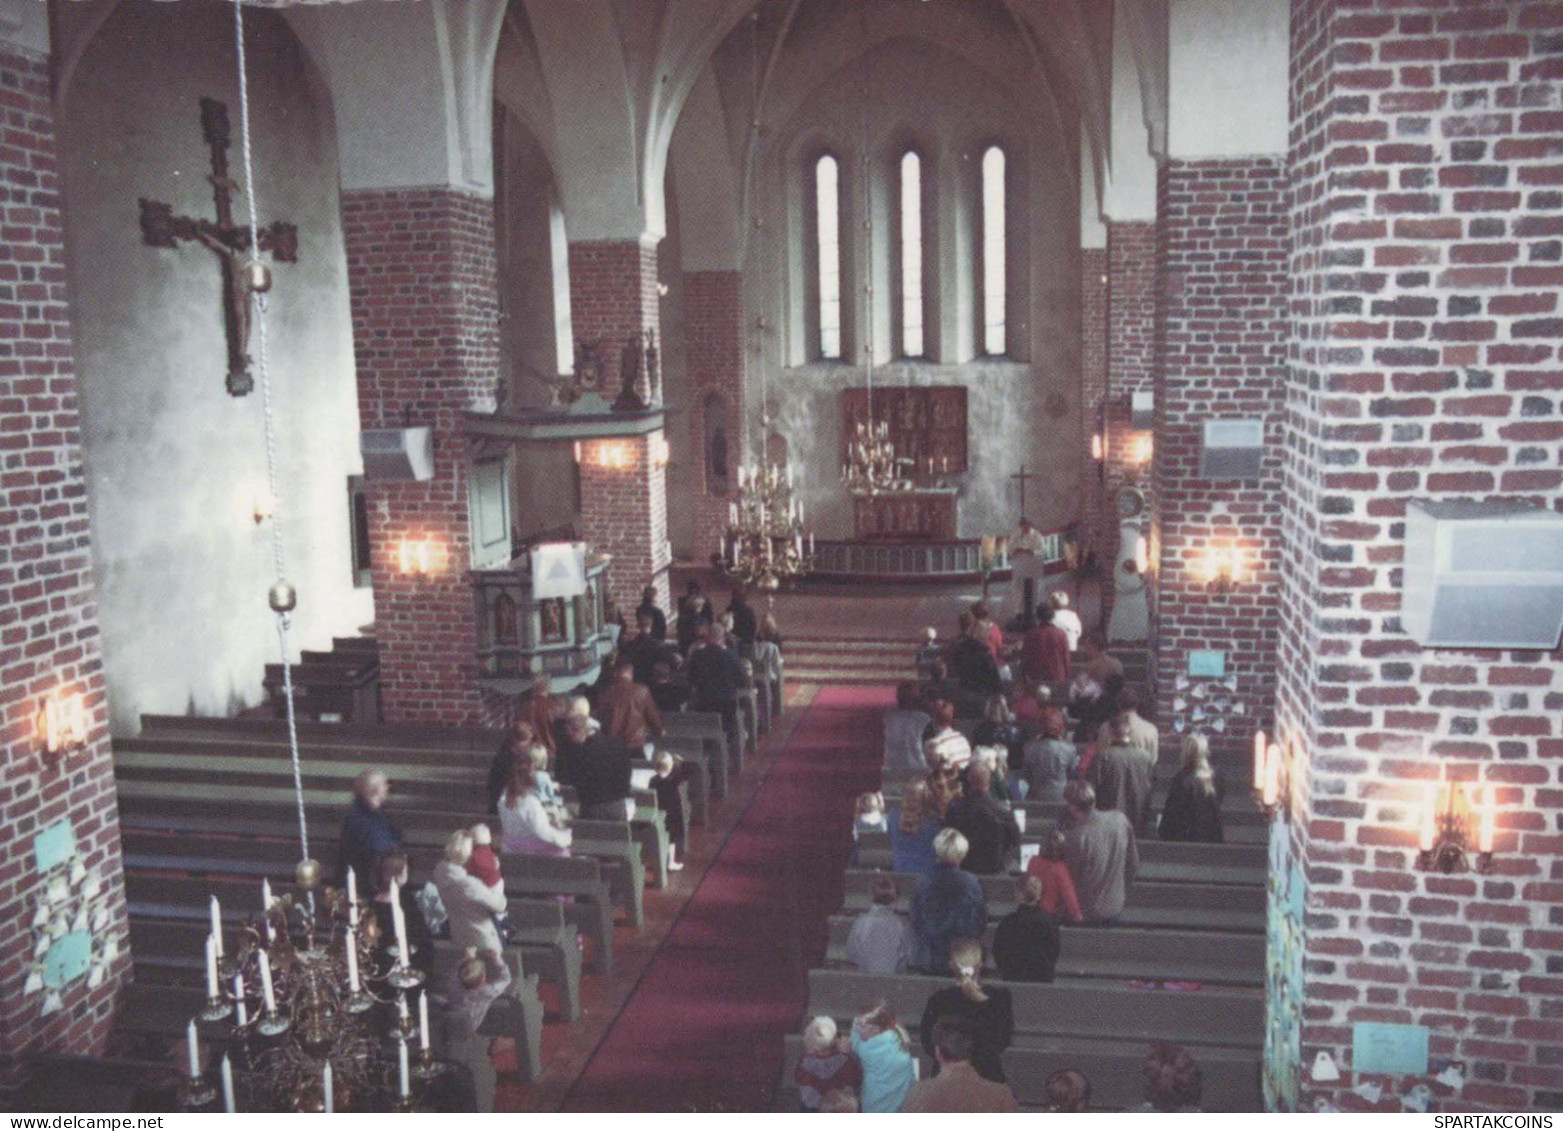 CHURCH Christianity Religion Vintage Postcard CPSM #PBQ226.GB - Churches & Convents